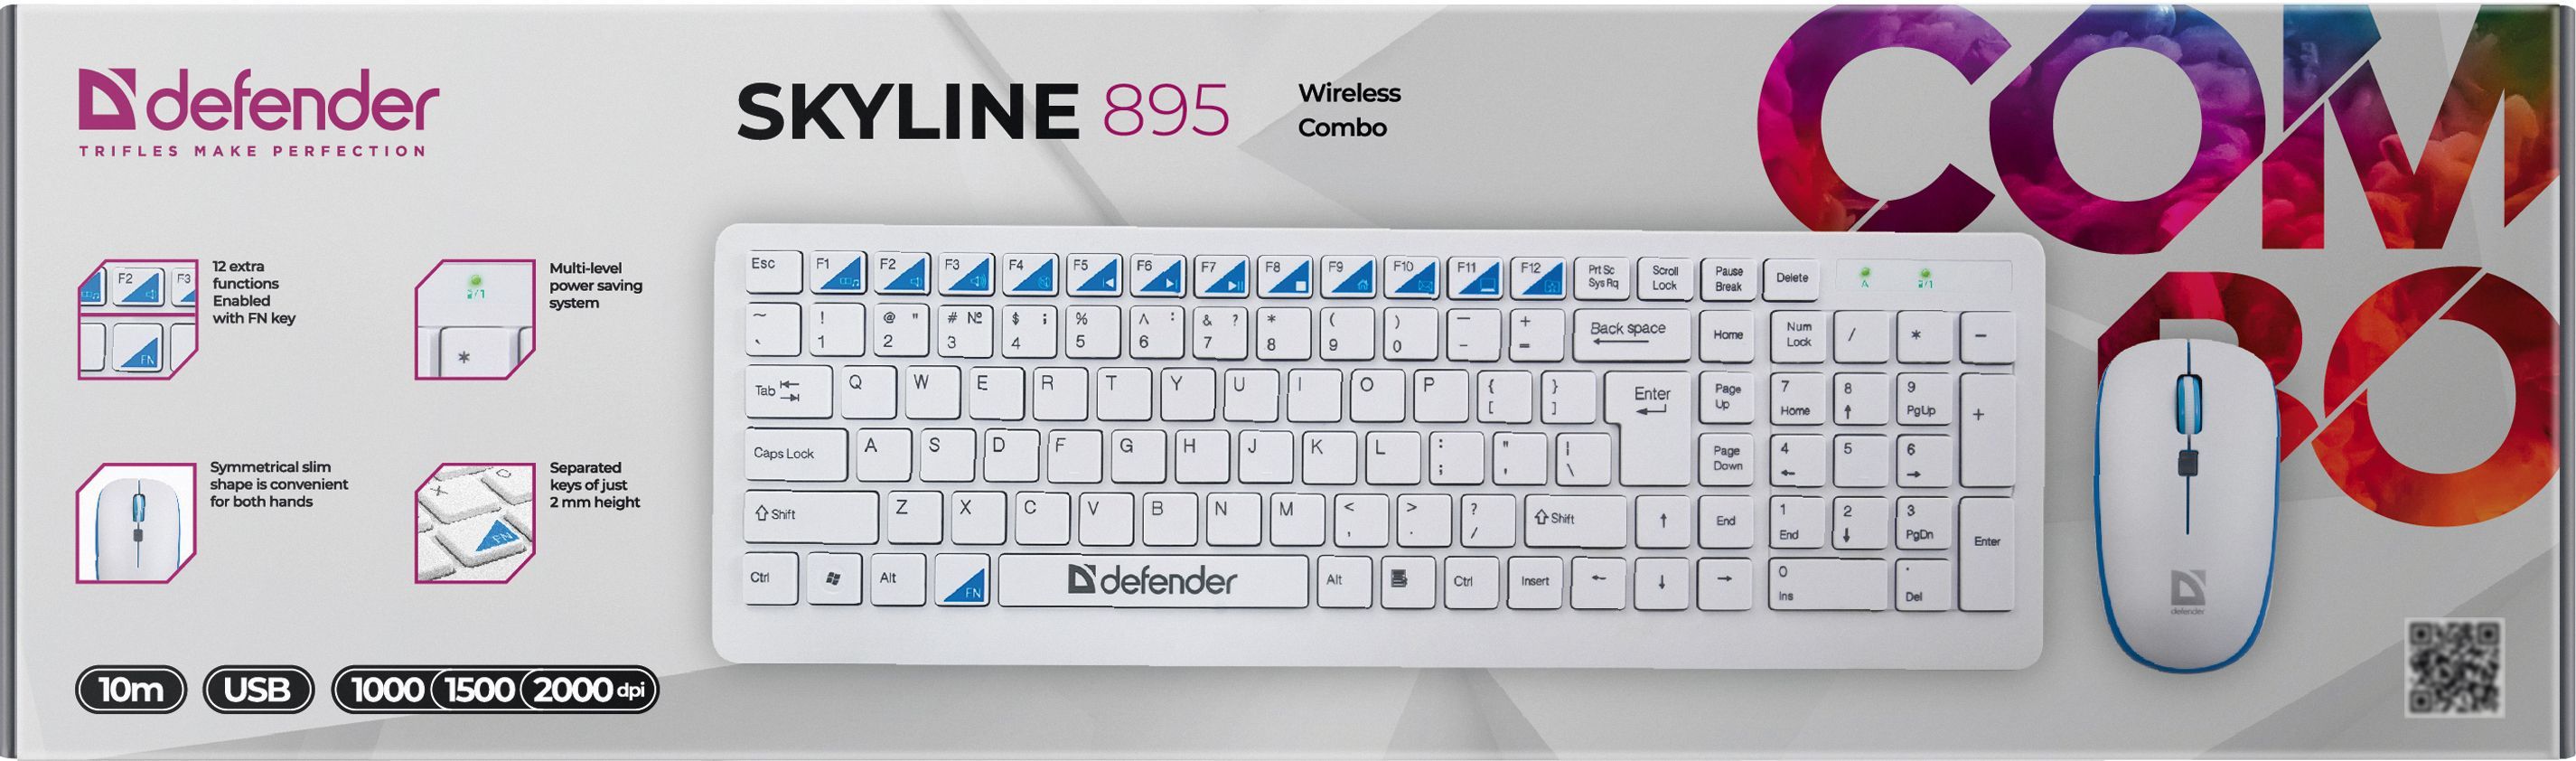 Defender skyline. Defender Skyline 895. Defender беспроводной набор Skyline 895 ru,белый, мультимедийный USB. Defender Skyline 895 габарит.